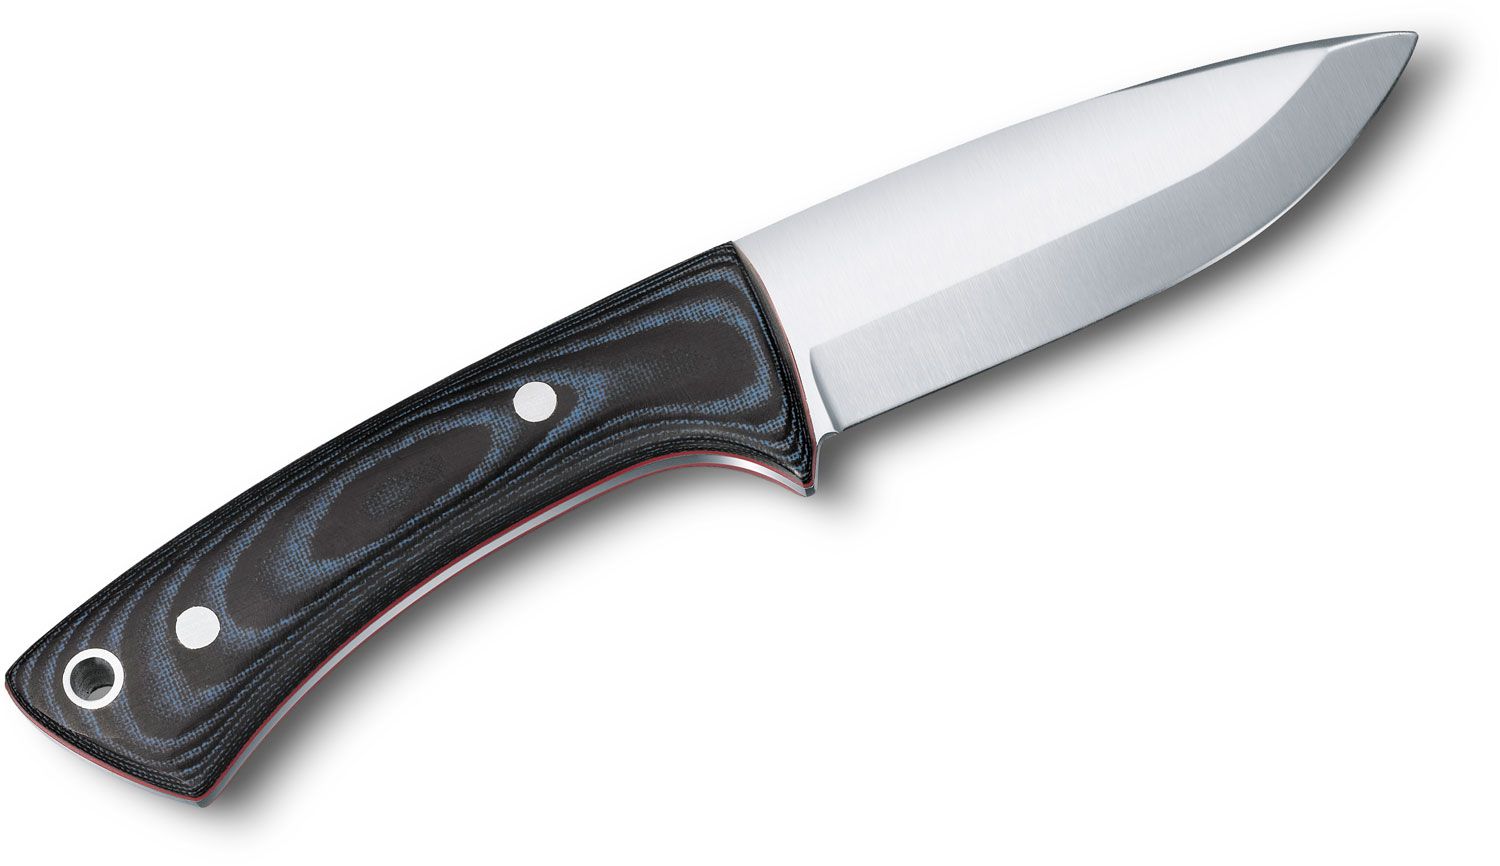 Victorinox Outdoor Master Mic Knife Small